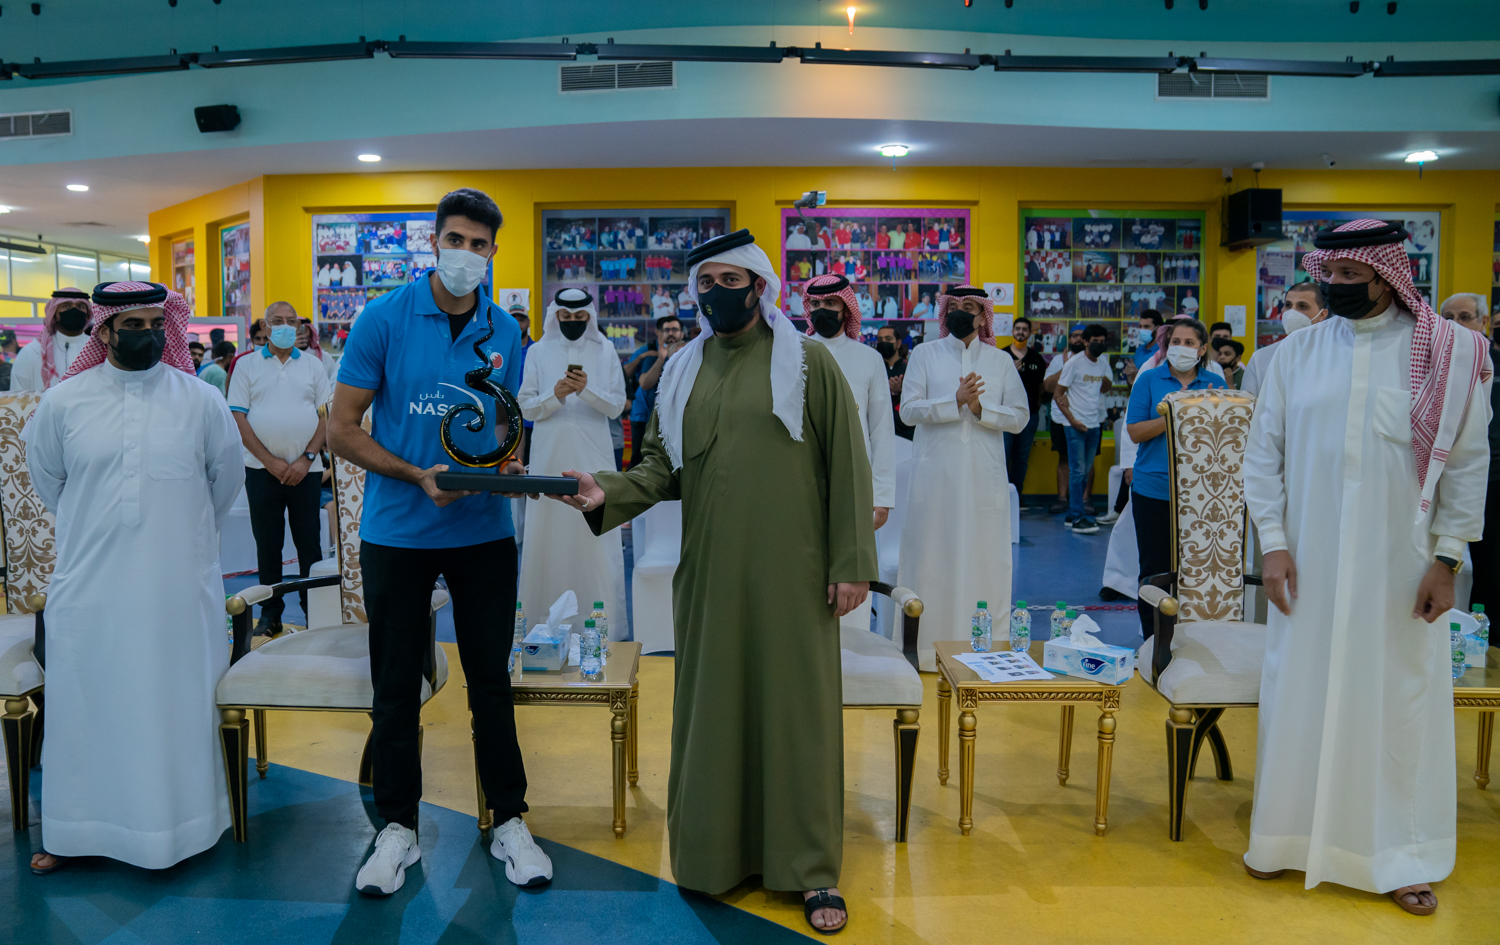 Late Abdullah bin Nass Open Bowling Championship held in Bahrain